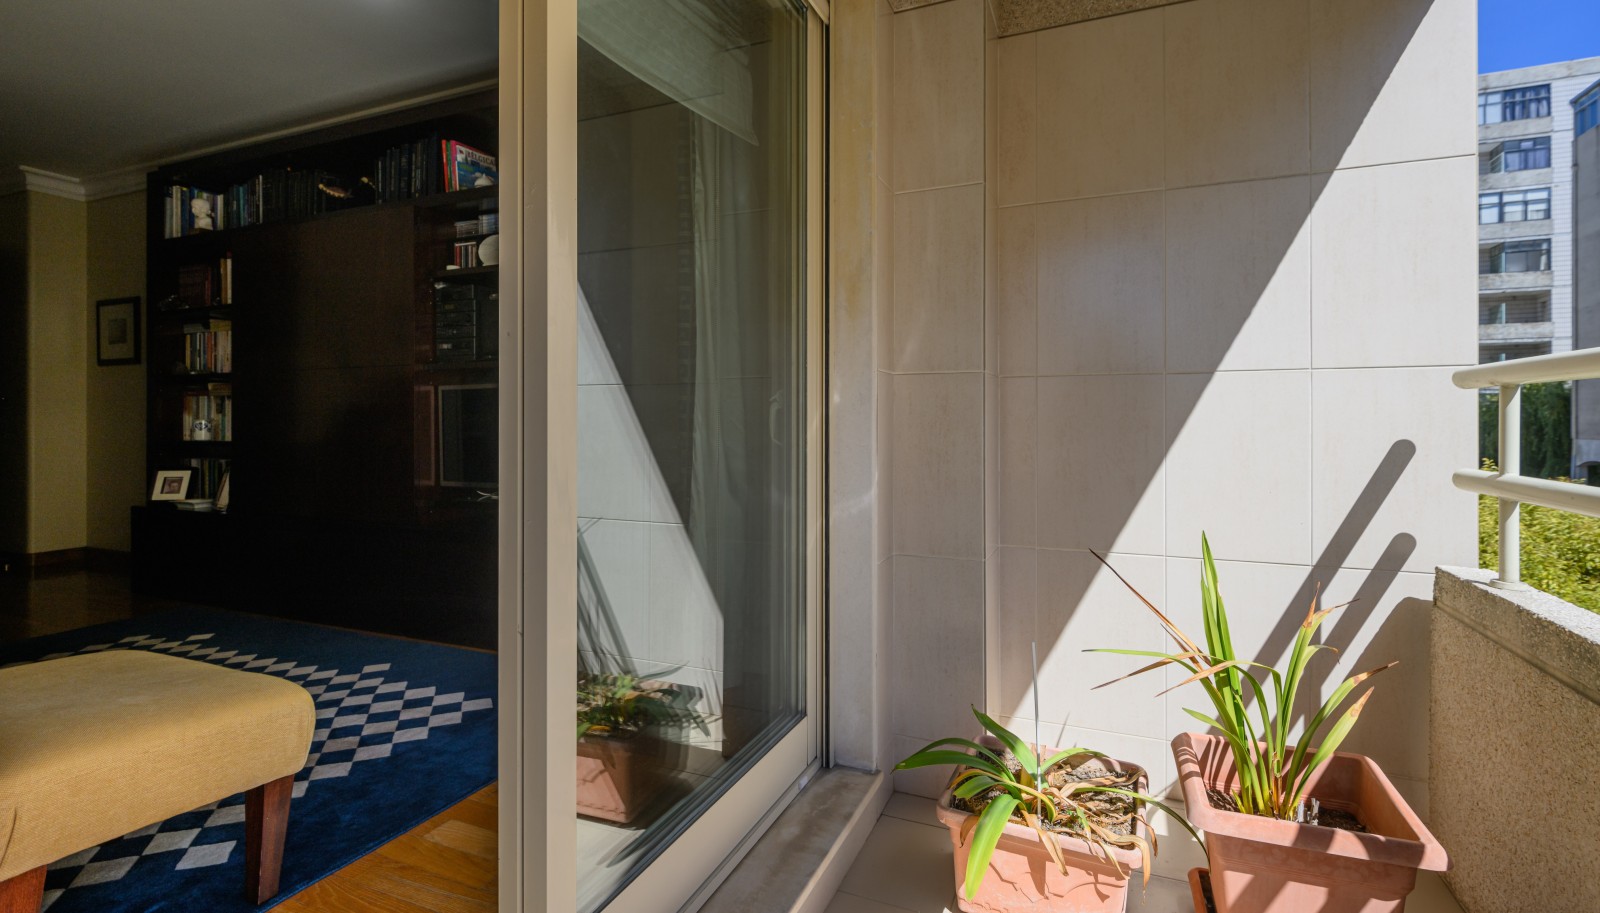 Appartement de 5 chambres avec balcon, à vendre, à V. N. Gaia, Porto, Portugal_236341